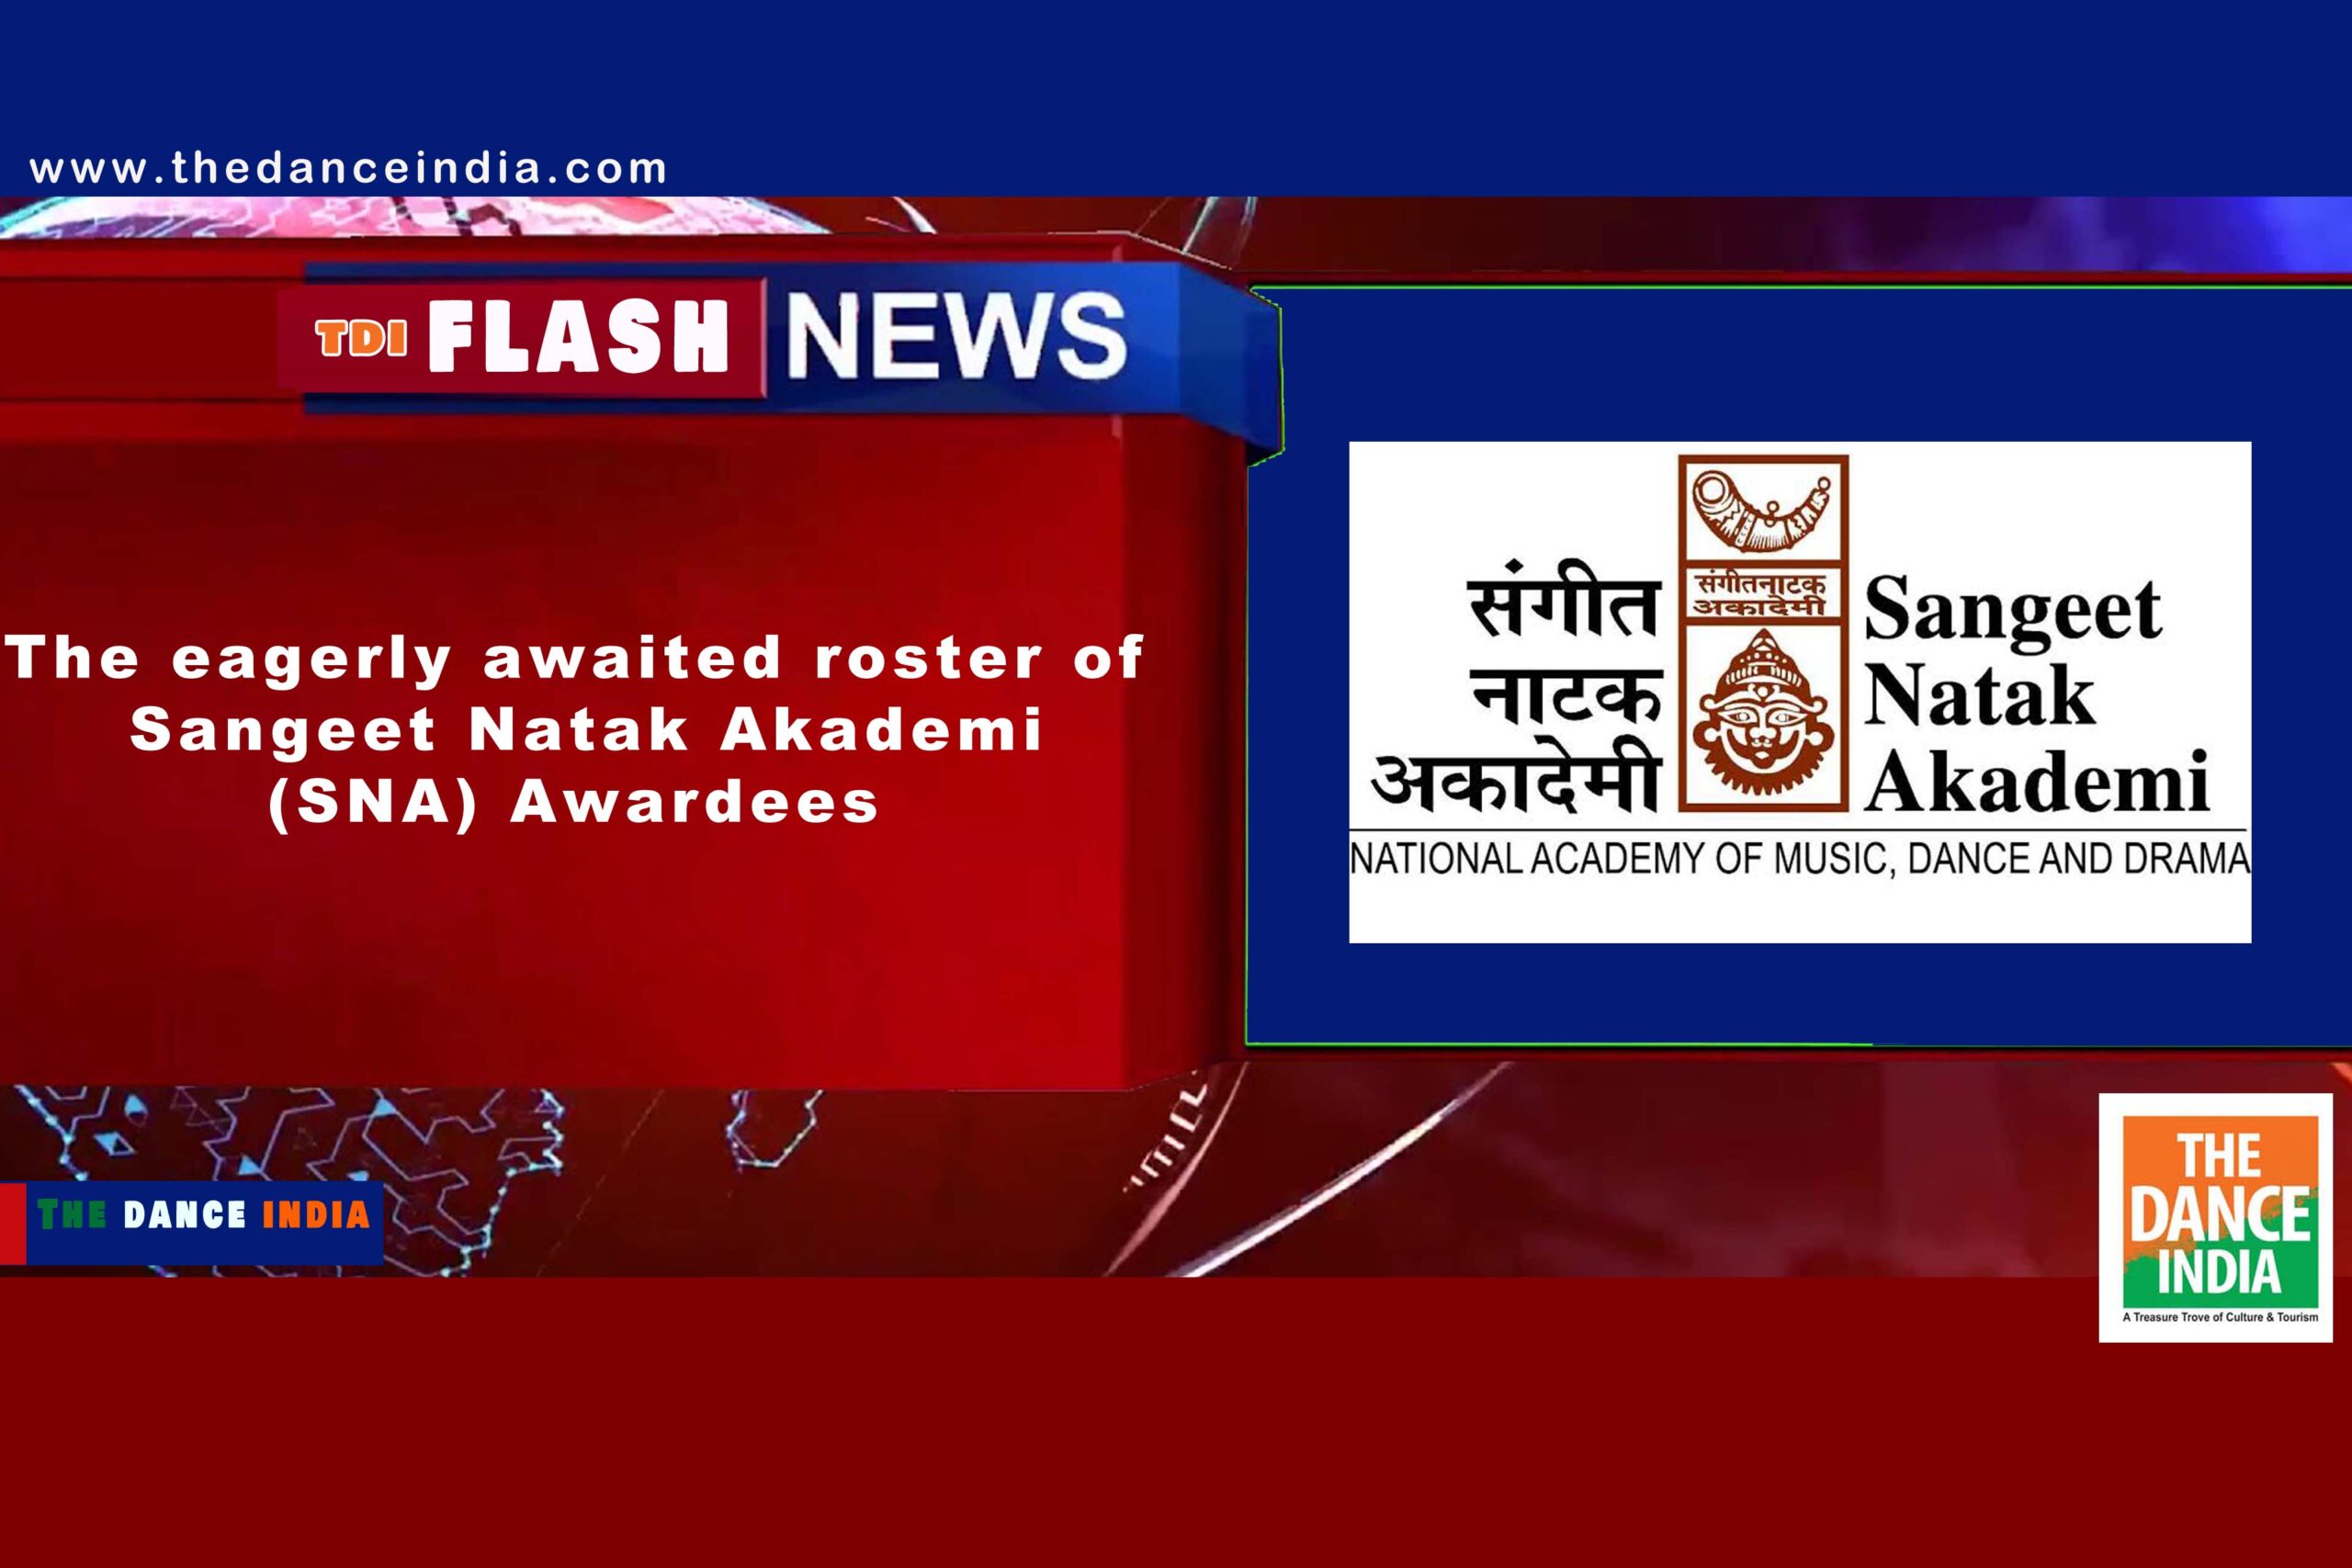 The eagerly awaited roster of Sangeet Natak Akademi (SNA) Awardees